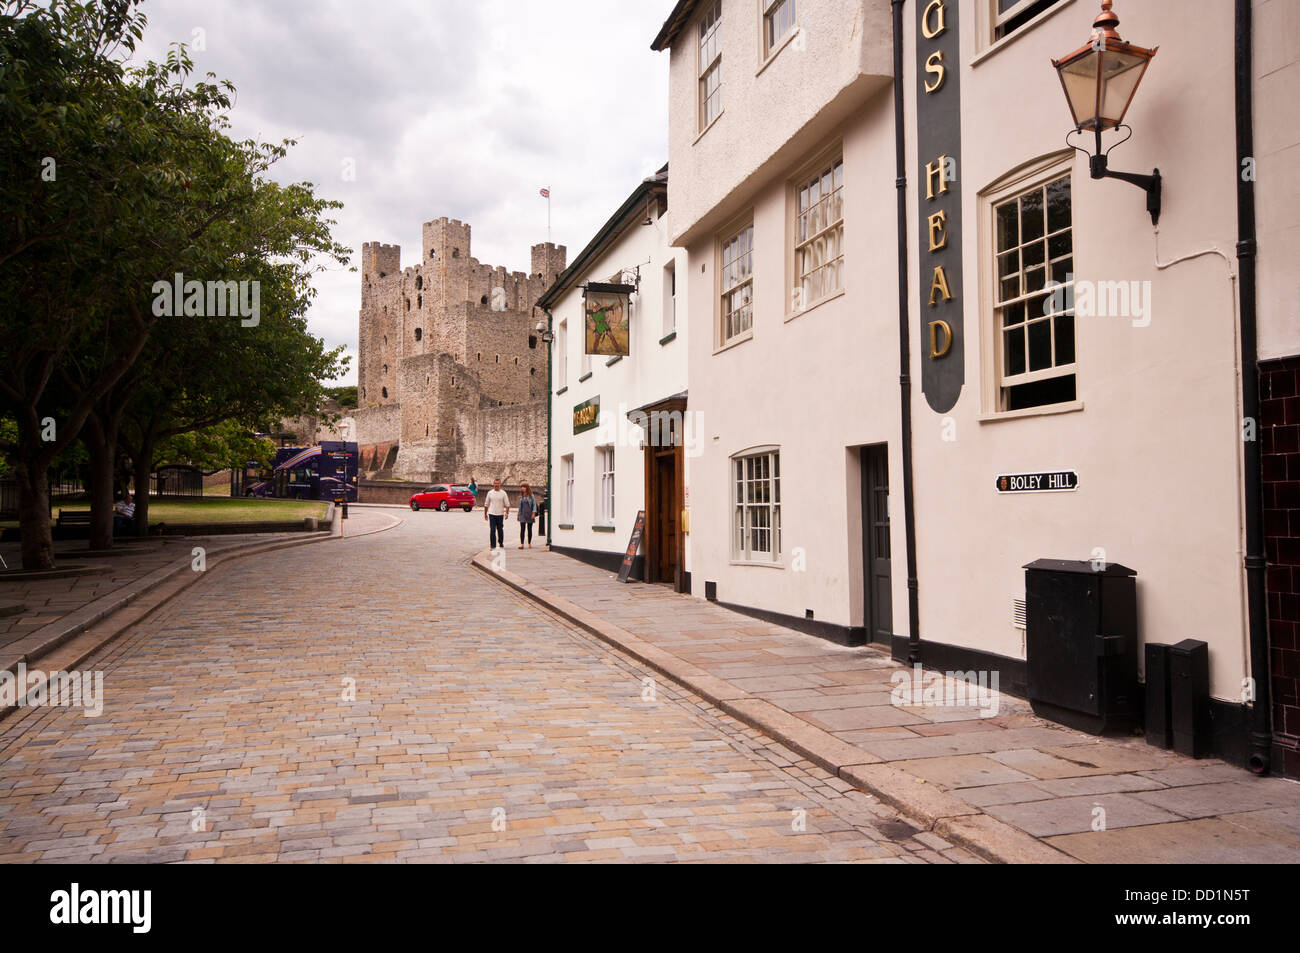 Rochester Castle Kent UK Stock Photo